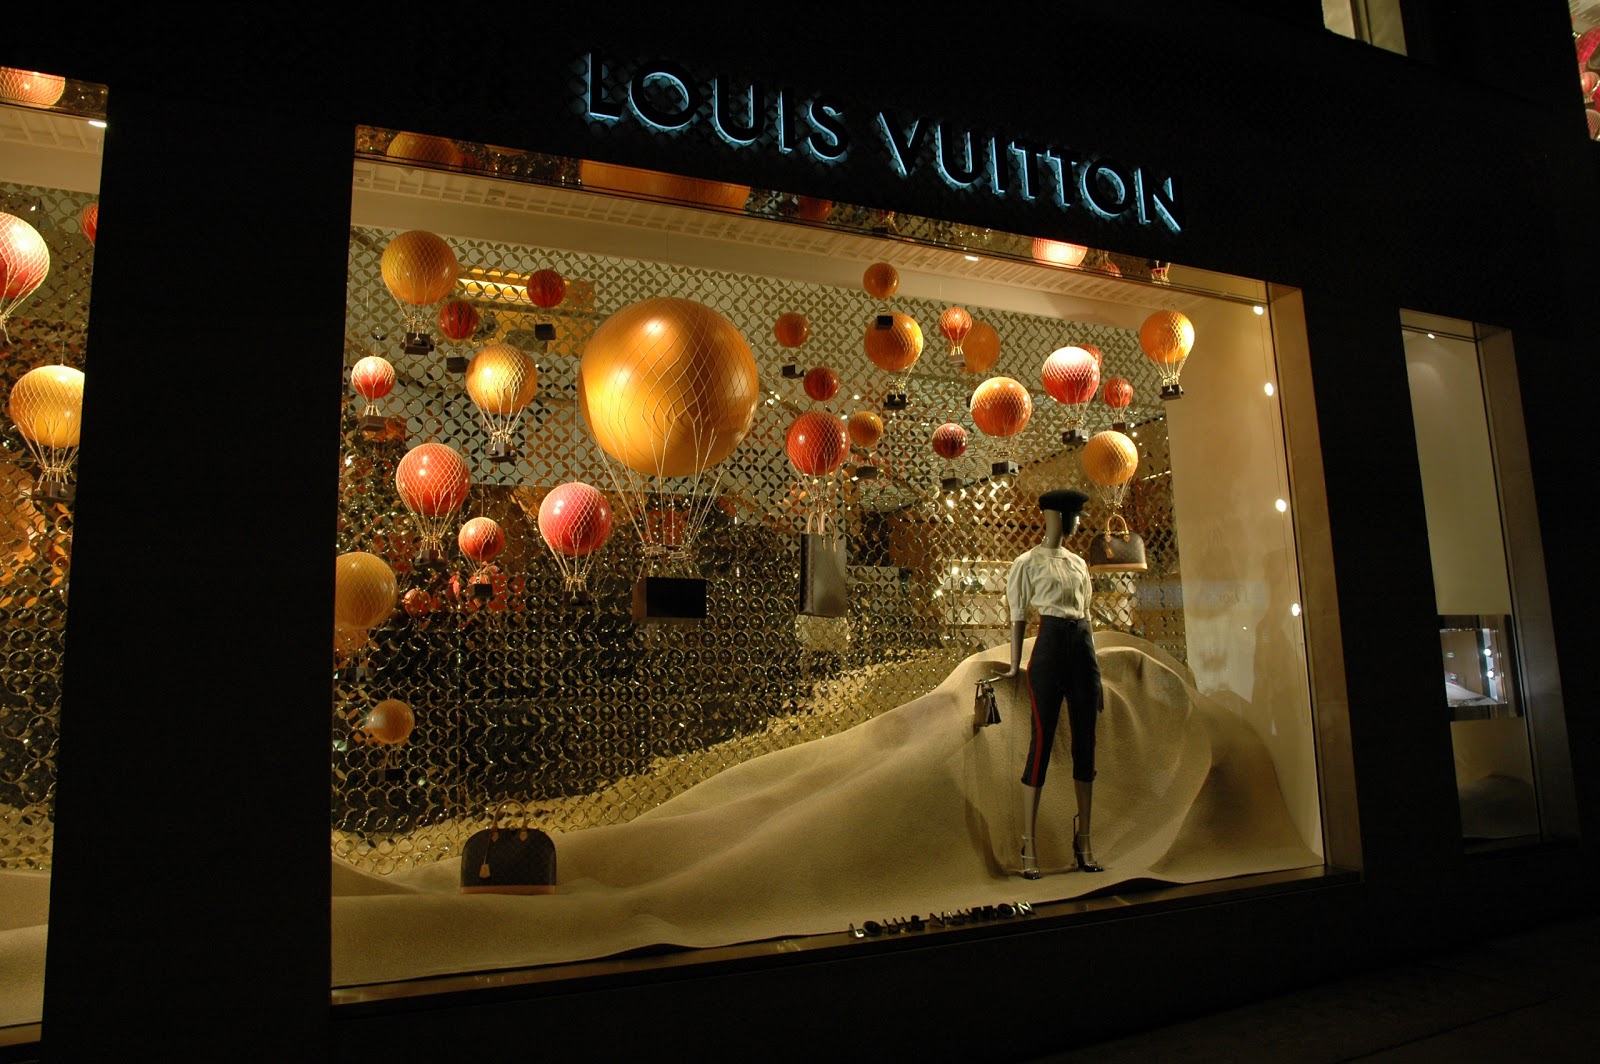 Louis Vuitton, Bond Street, West End